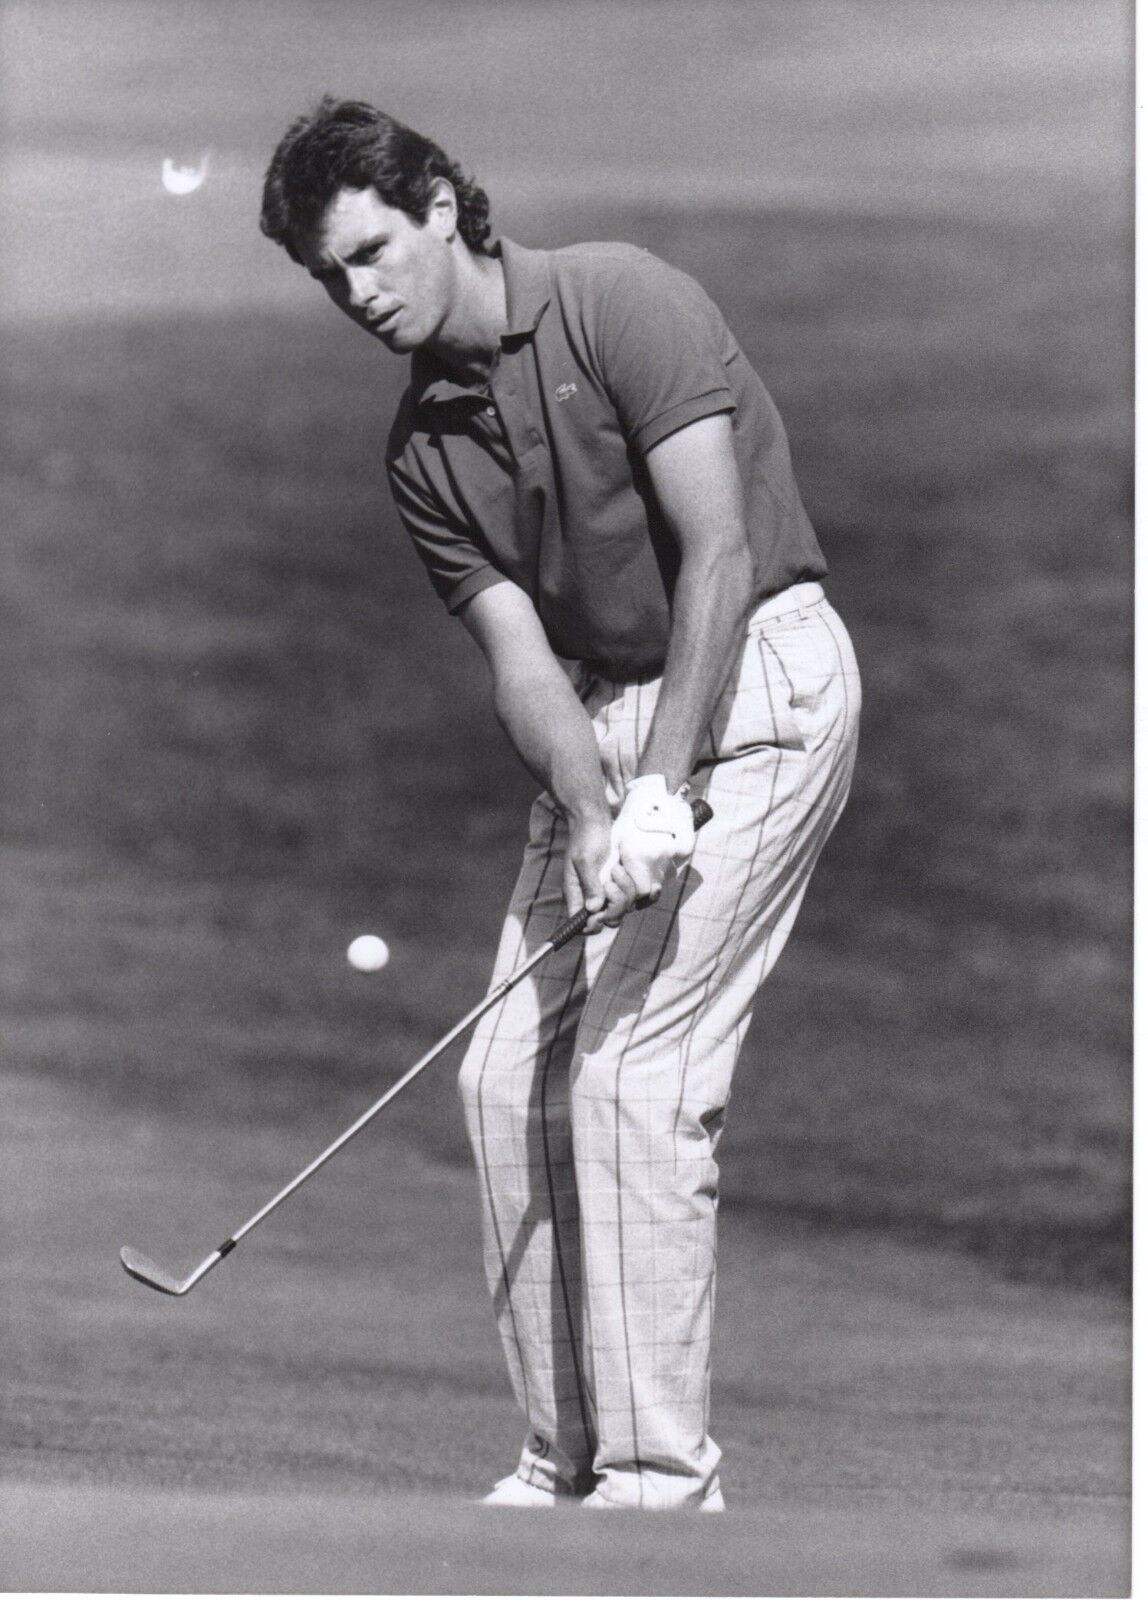 Original Press Photo Golf Ian Baker-Finch Australia May 1988 (1)